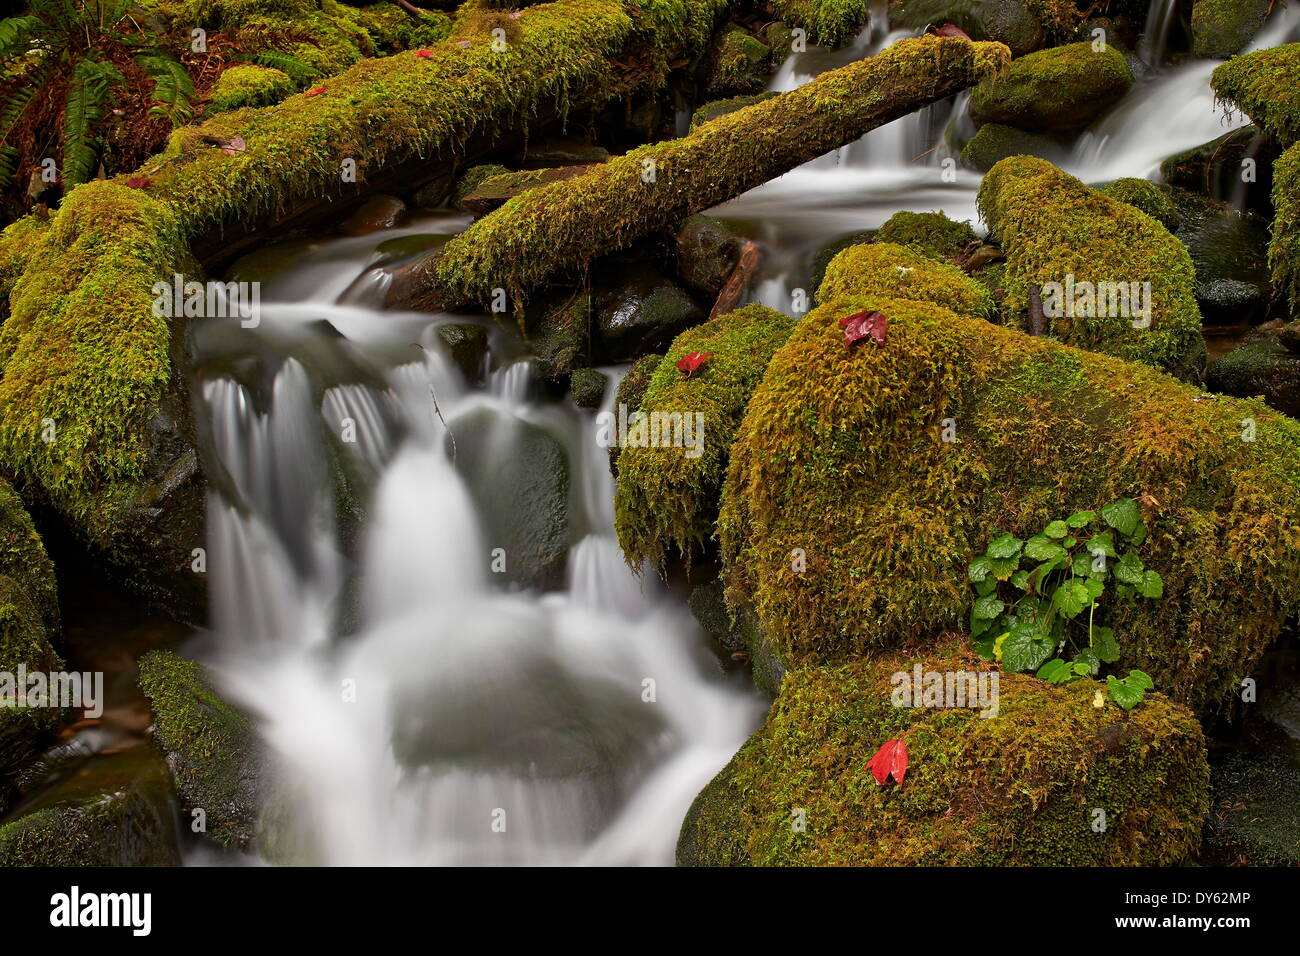 Kaskaden durch moosbedeckten Felsblöcken, Olympic National Park, der UNESCO, Washington, USA Stockfoto